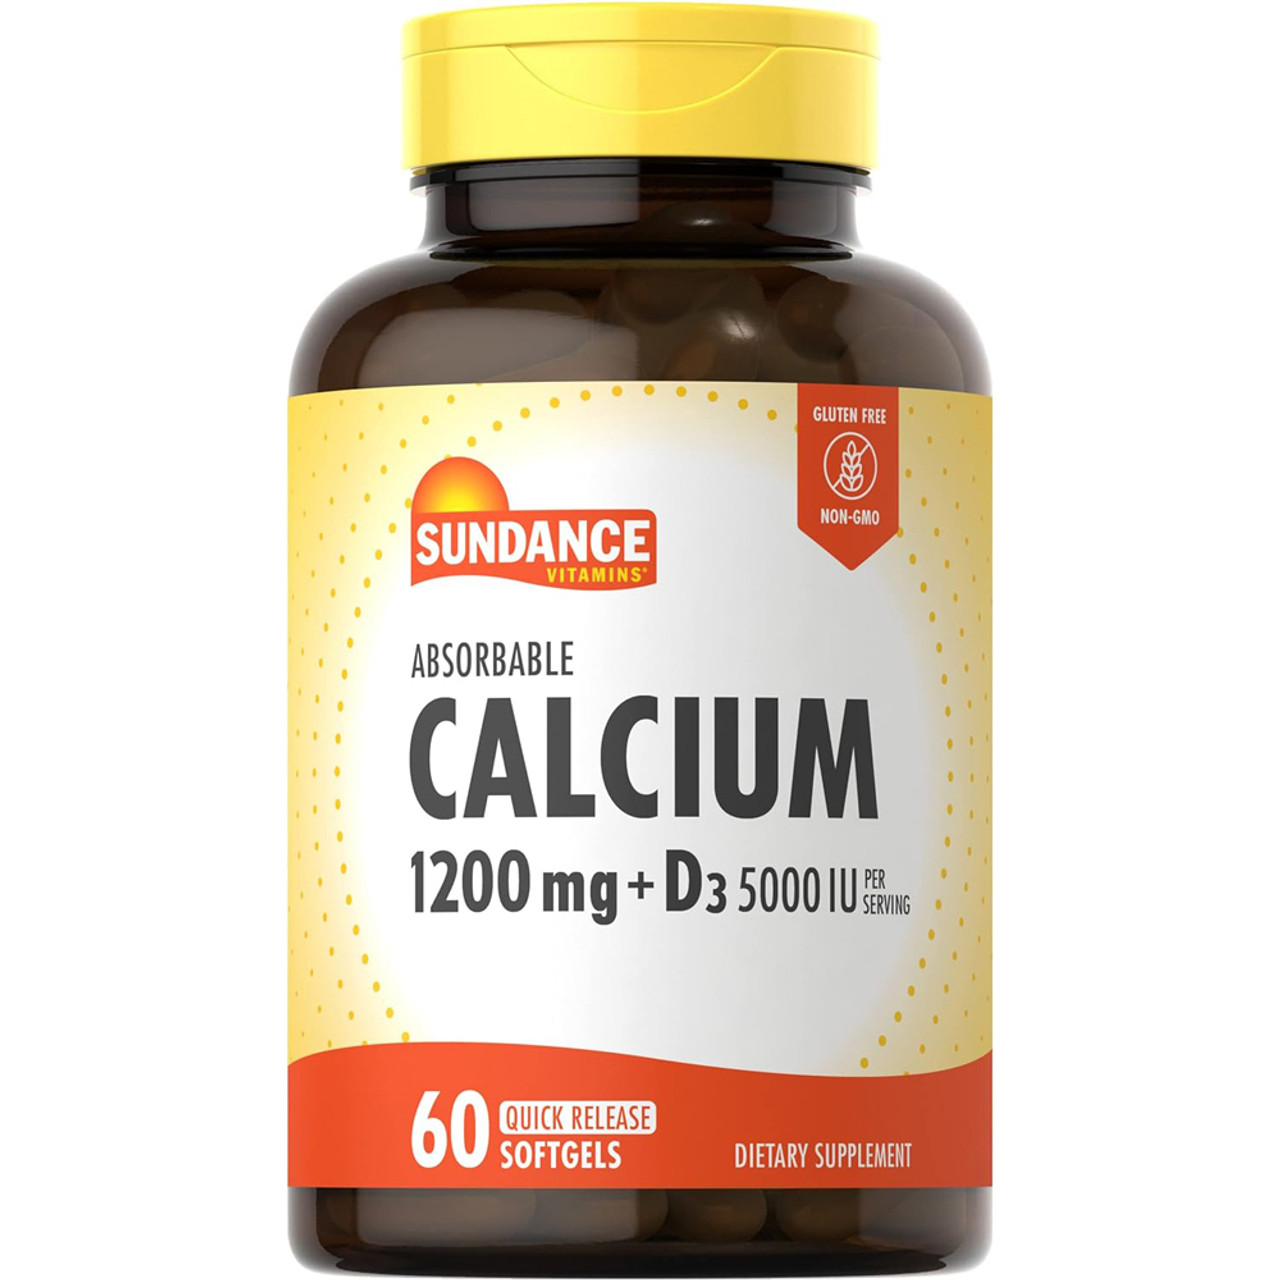 Sundance Vitamins Absorbable Calcium 1200 Mg D3 5000 Iu 60 Softgels